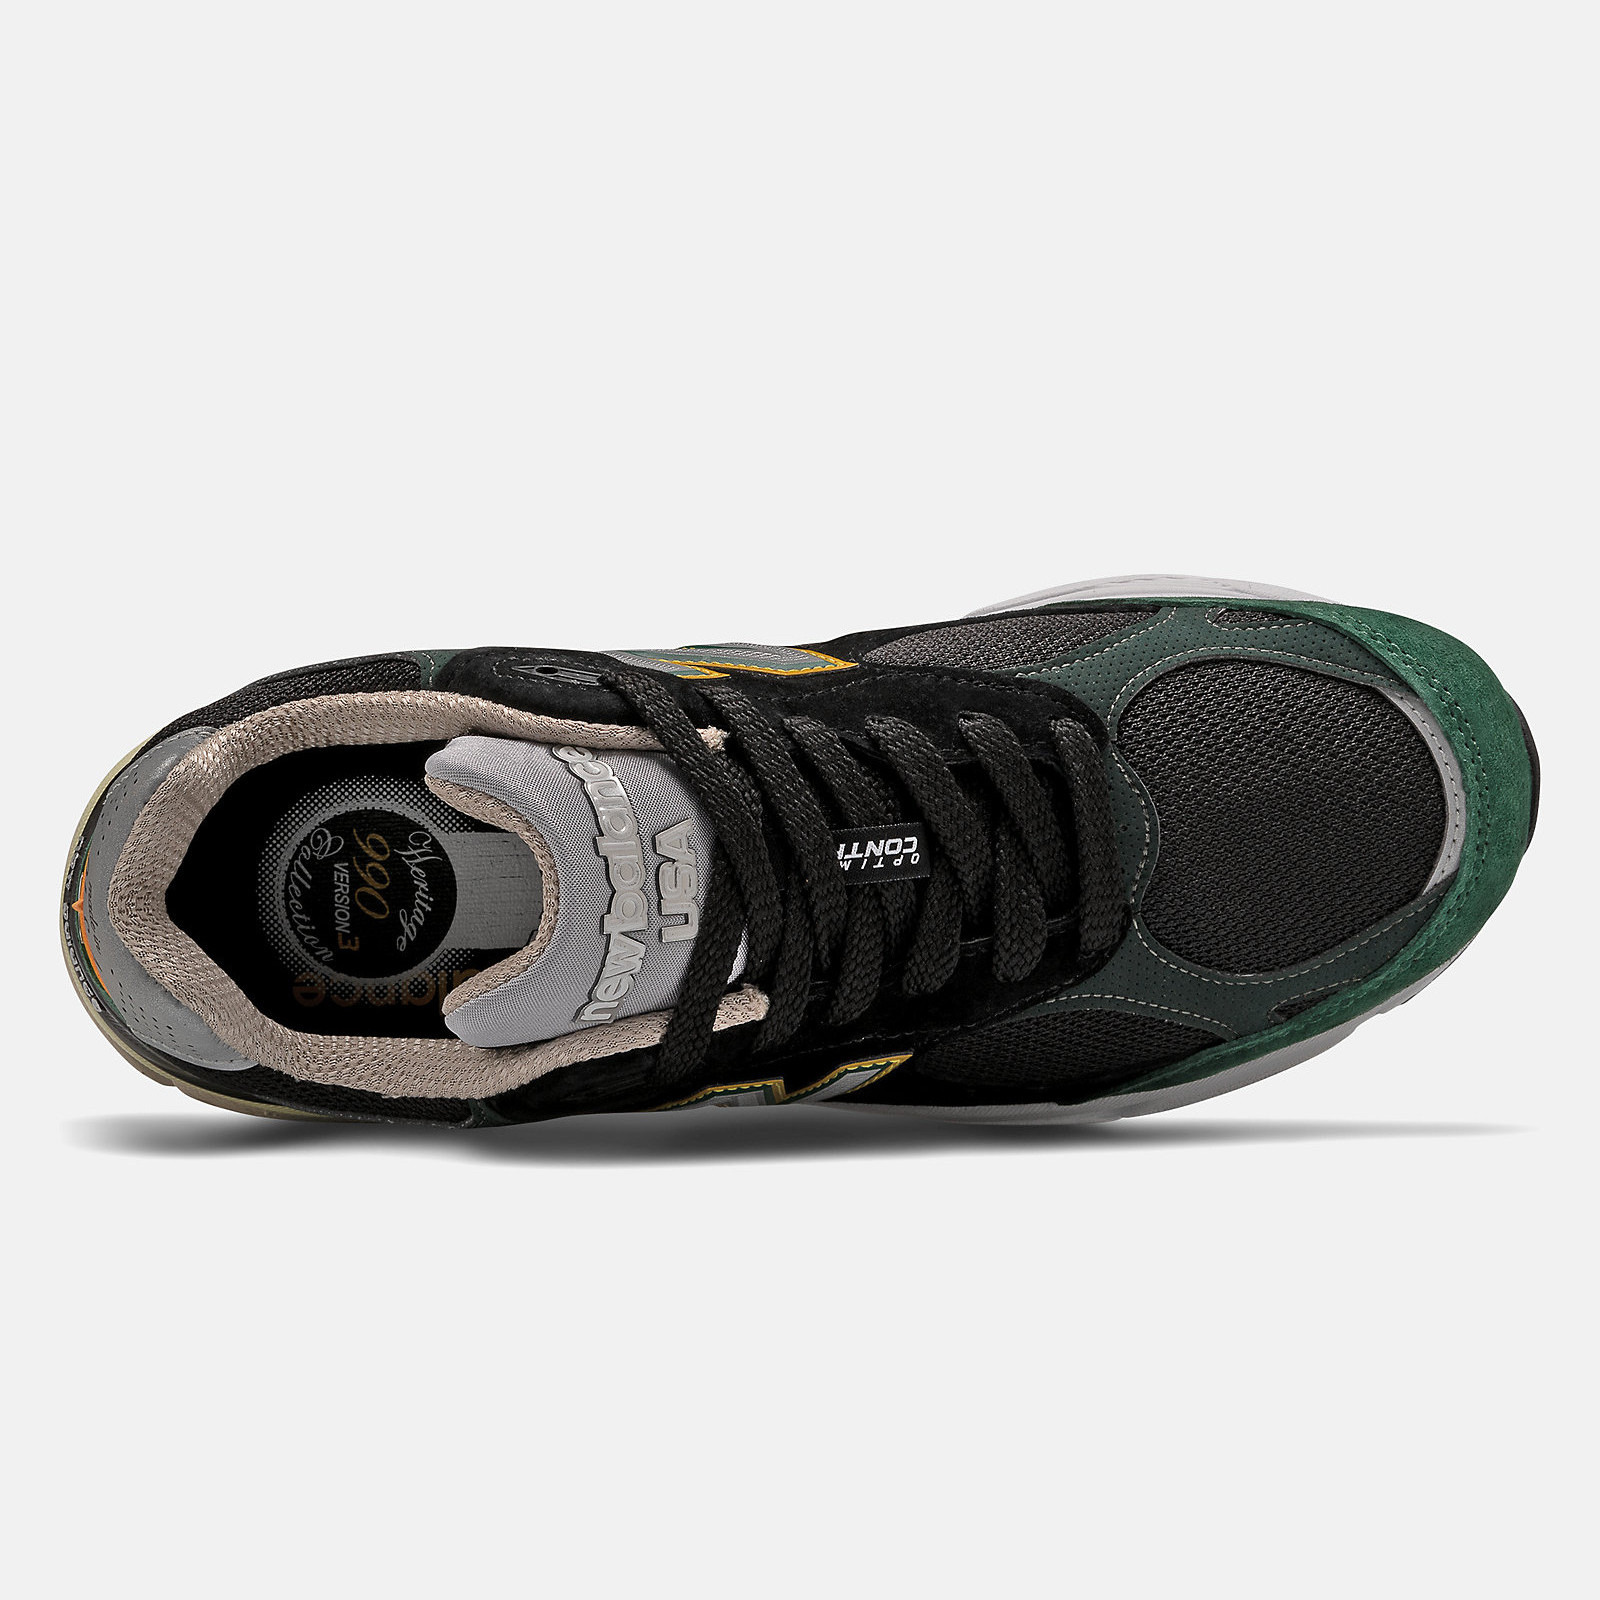 New Balance 990v3
Black / Green